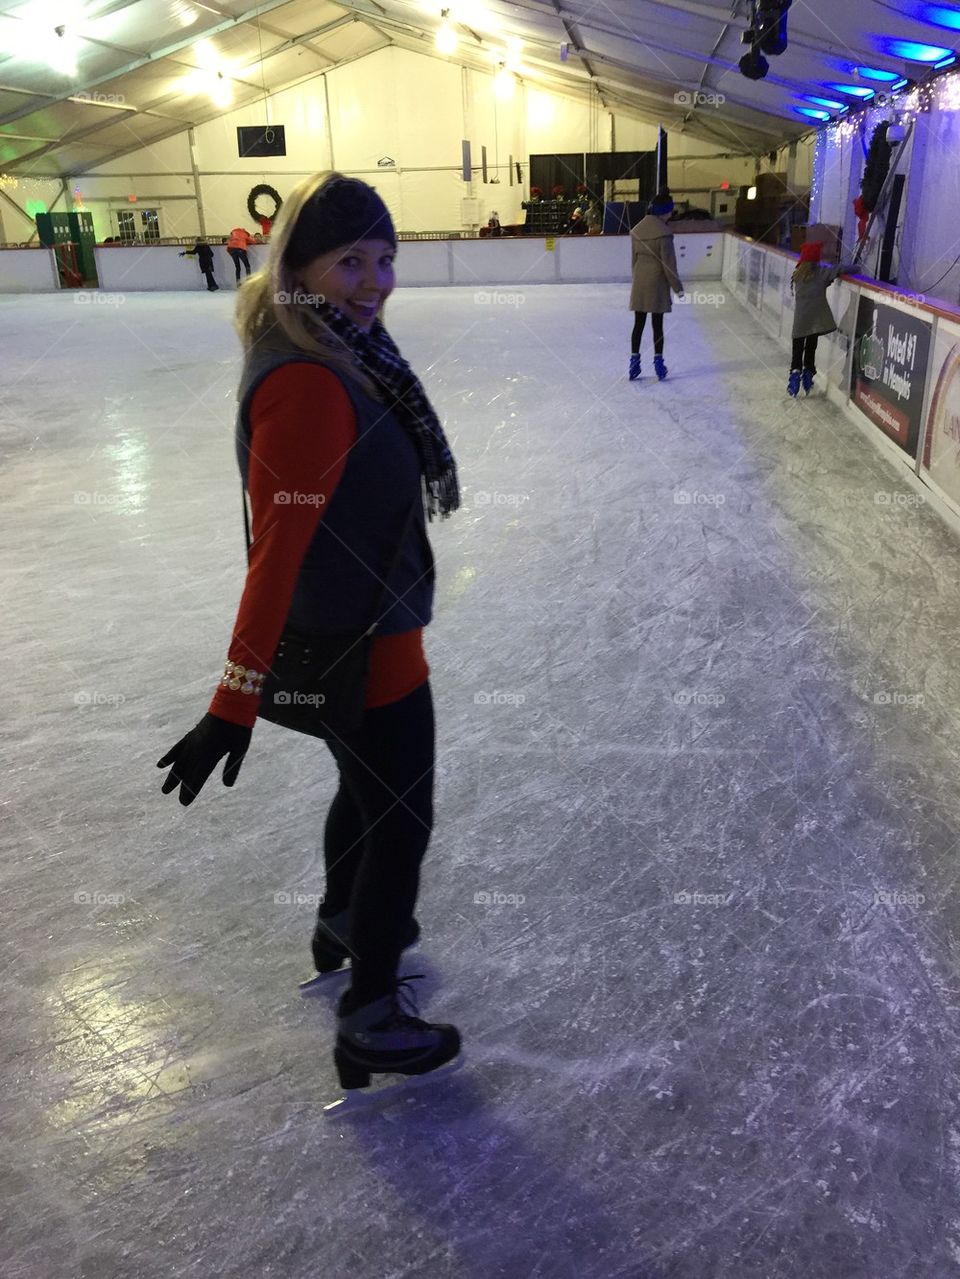 Ice skate 